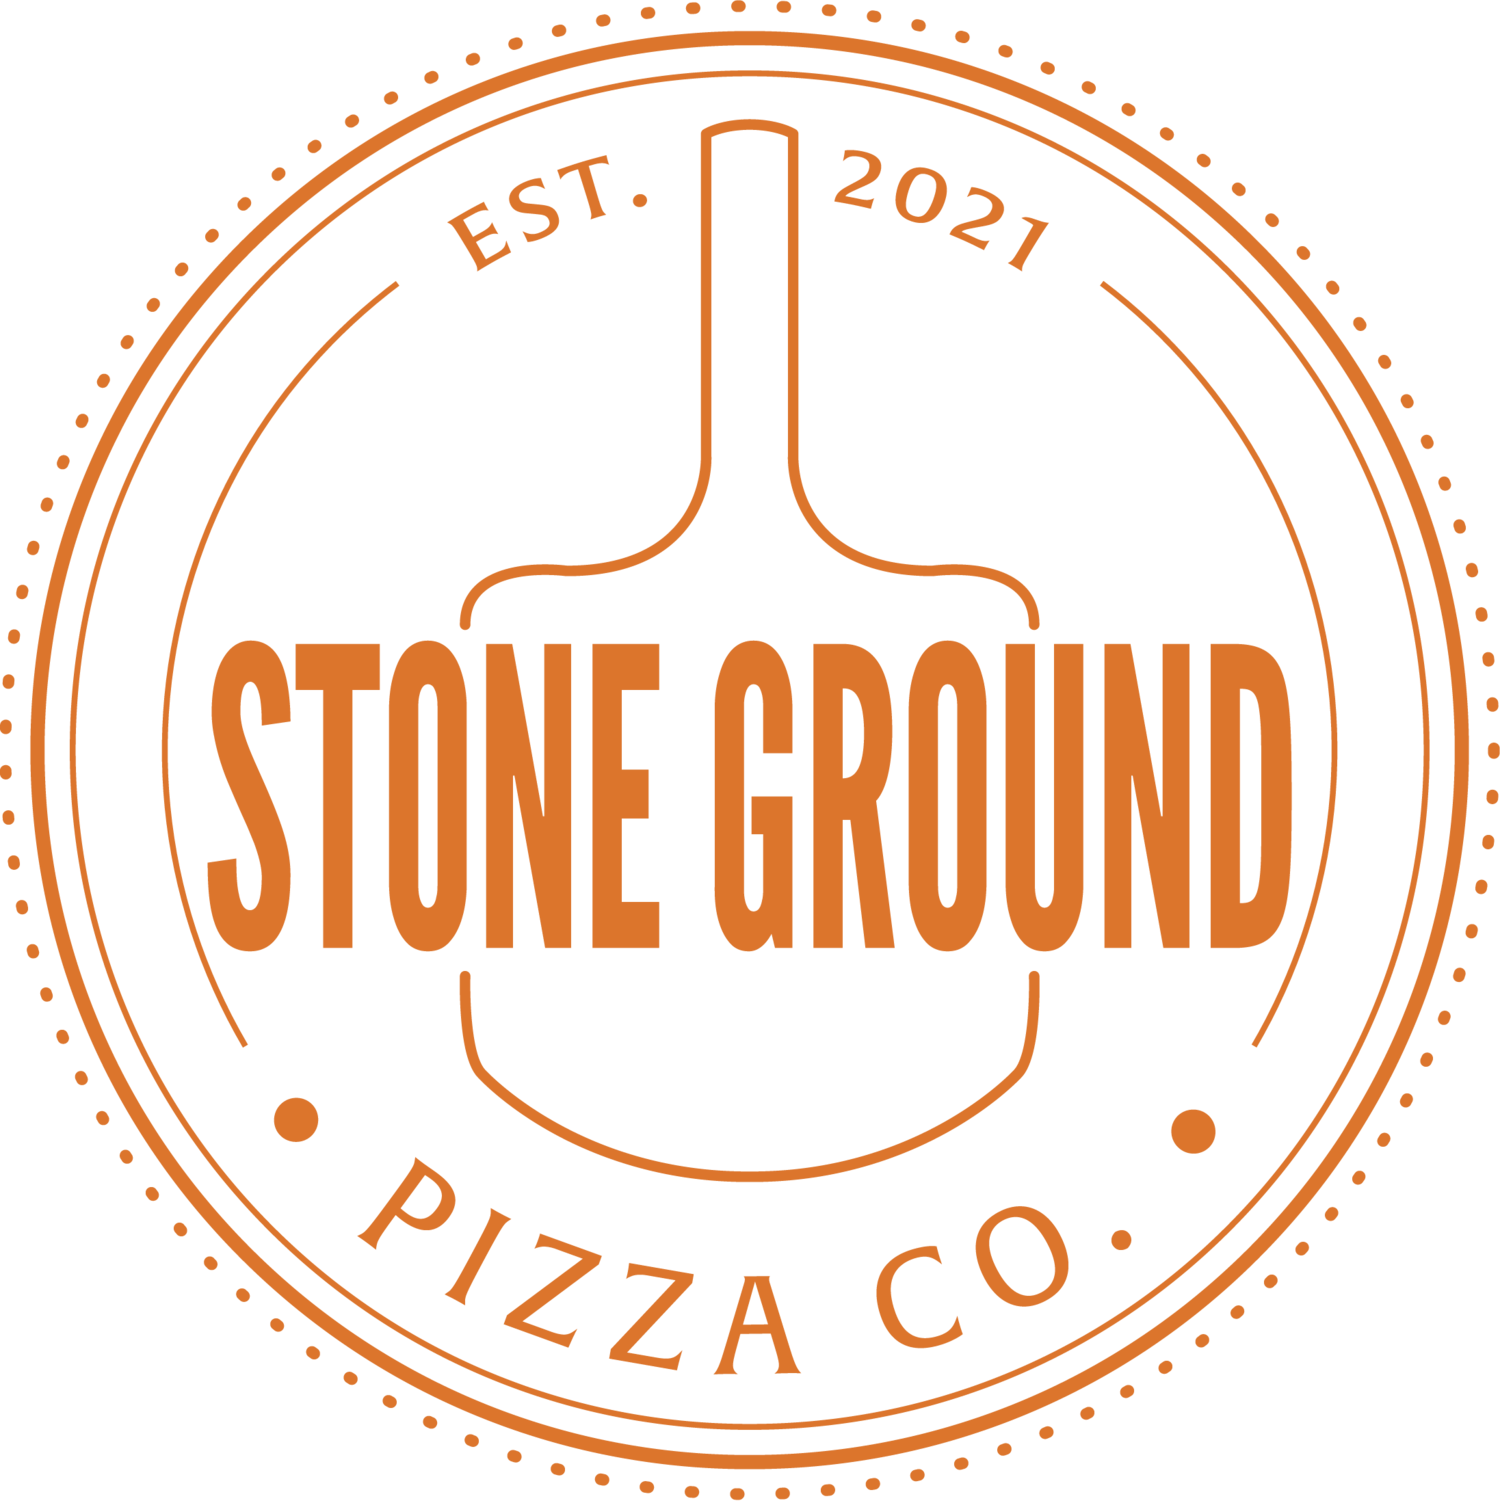 Stone Ground Pizza Company